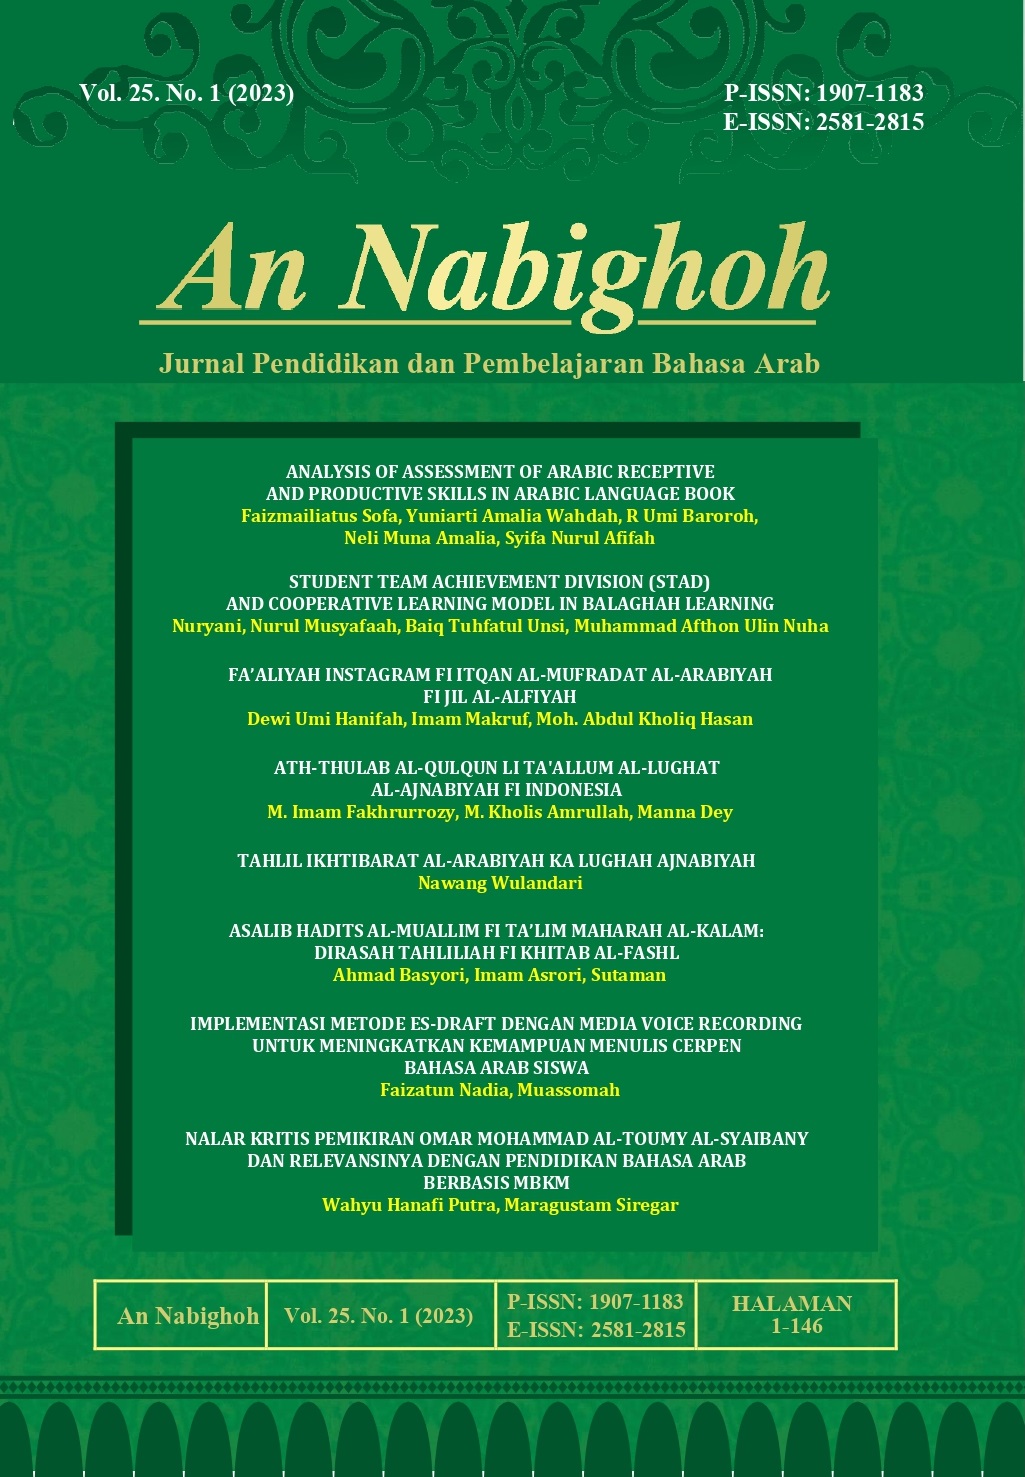 					View Vol. 25 No. 1 (2023): An Nabighoh
				